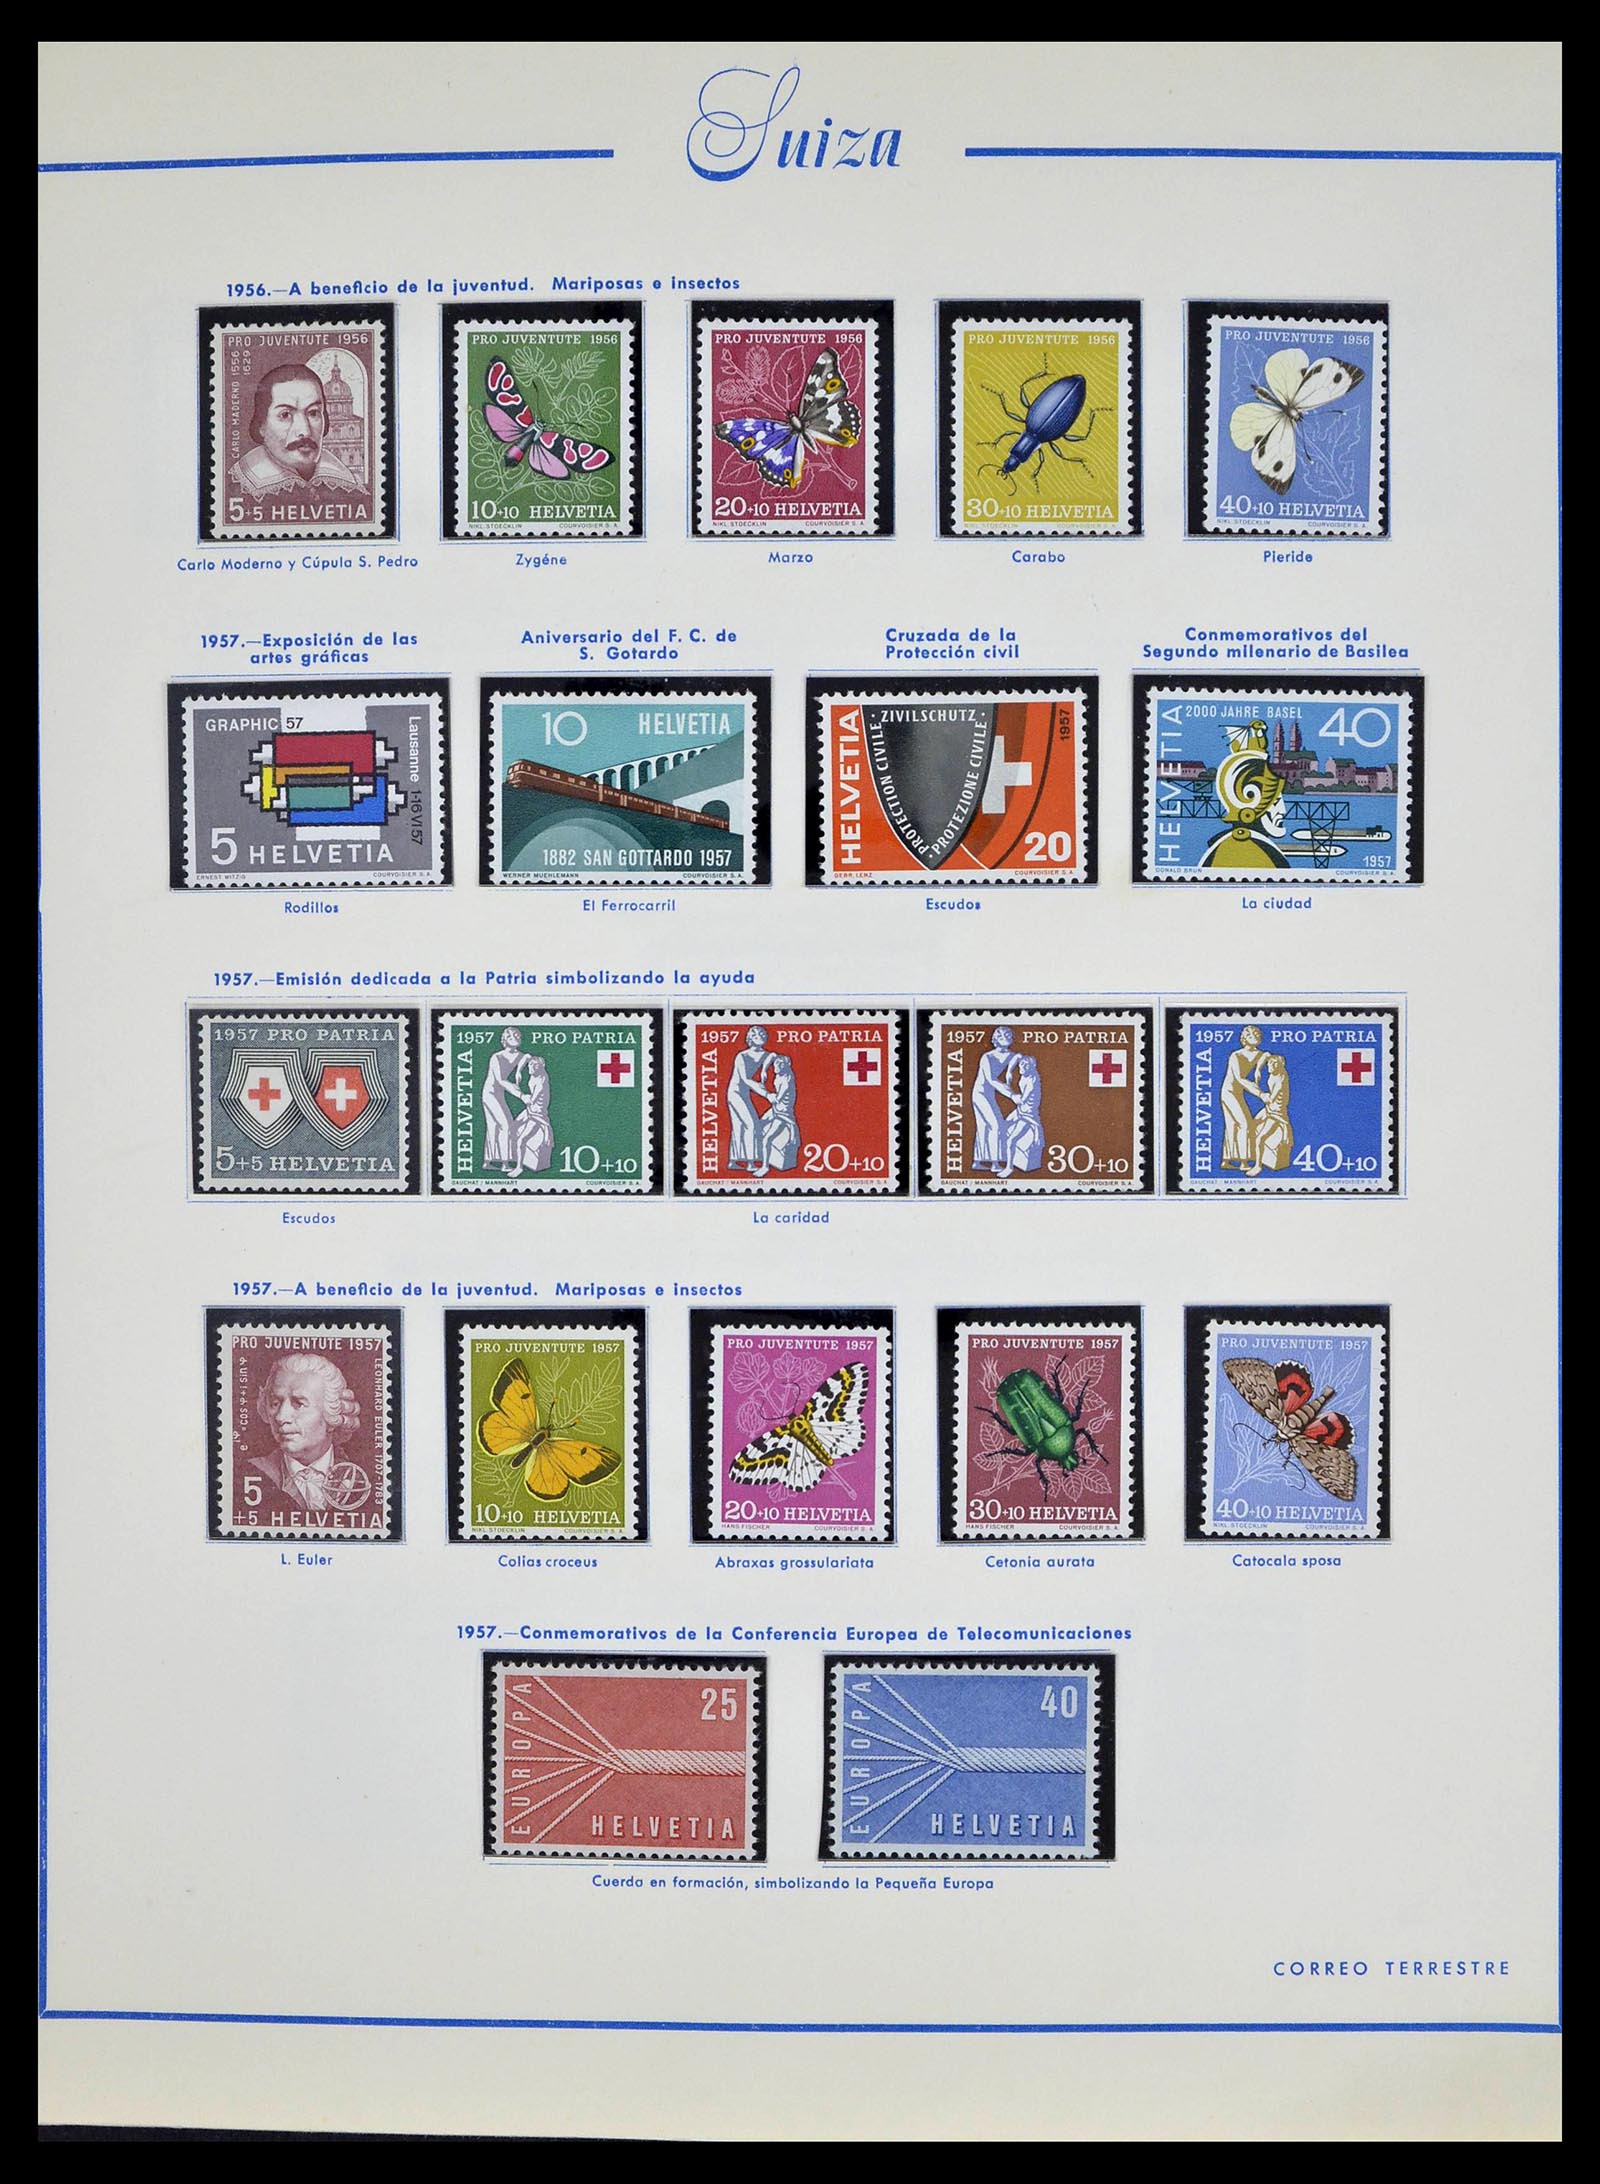 39217 0035 - Stamp collection 39217 Switzerland 1850-1986.